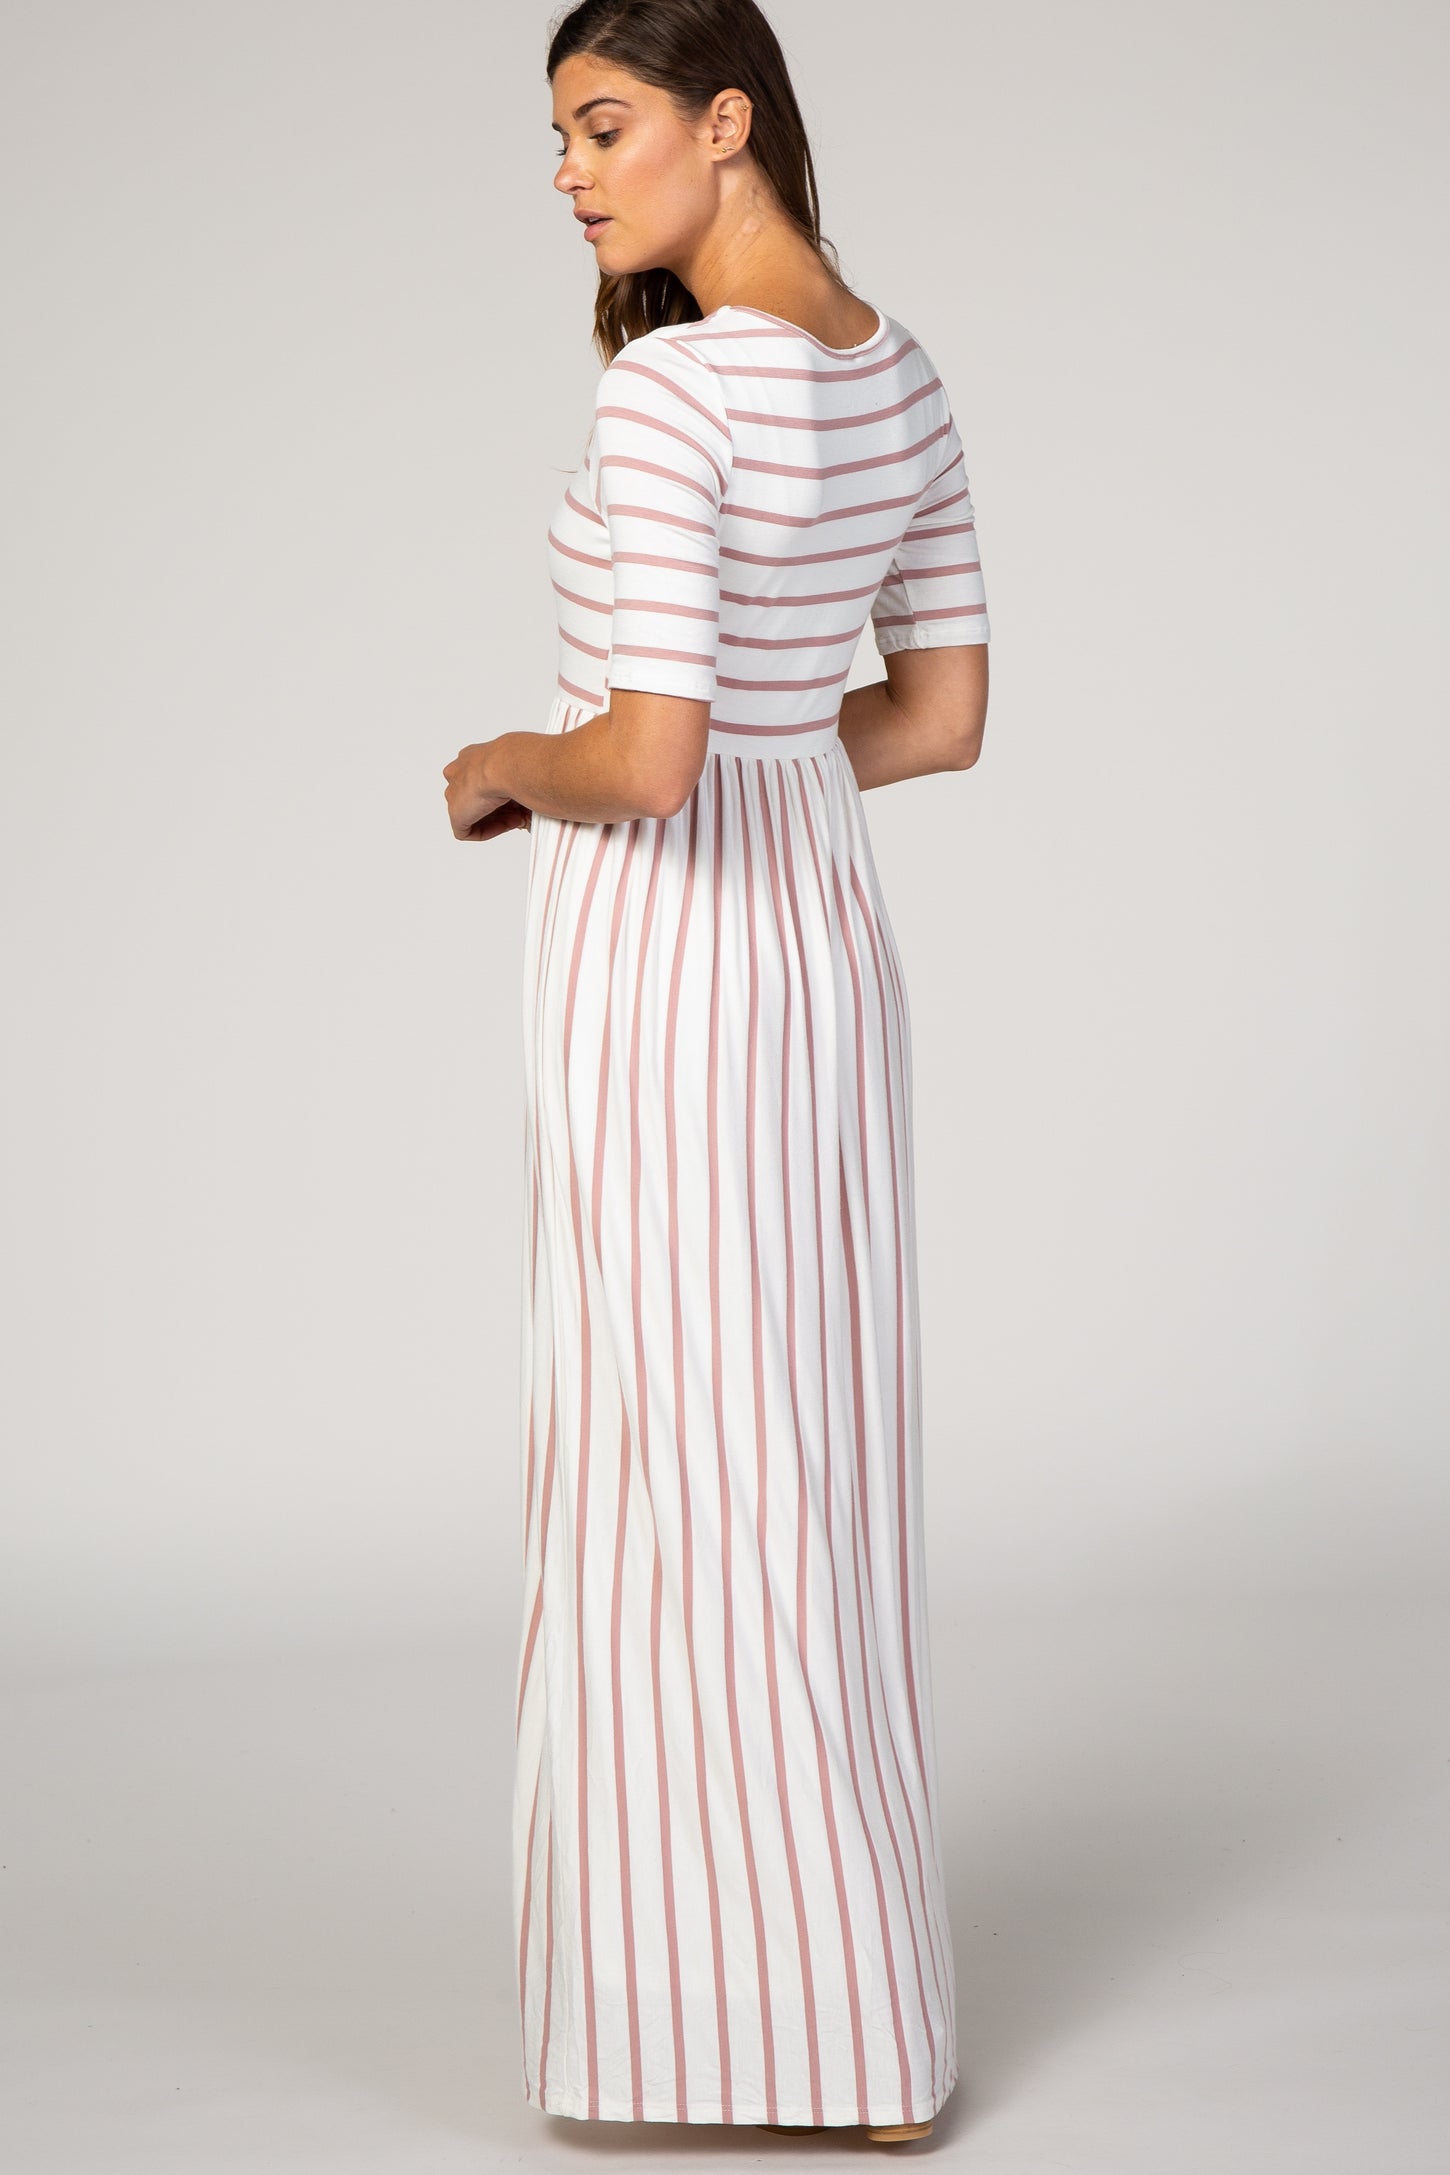 PinkBlush Mauve Striped Half Sleeve Maxi Dress